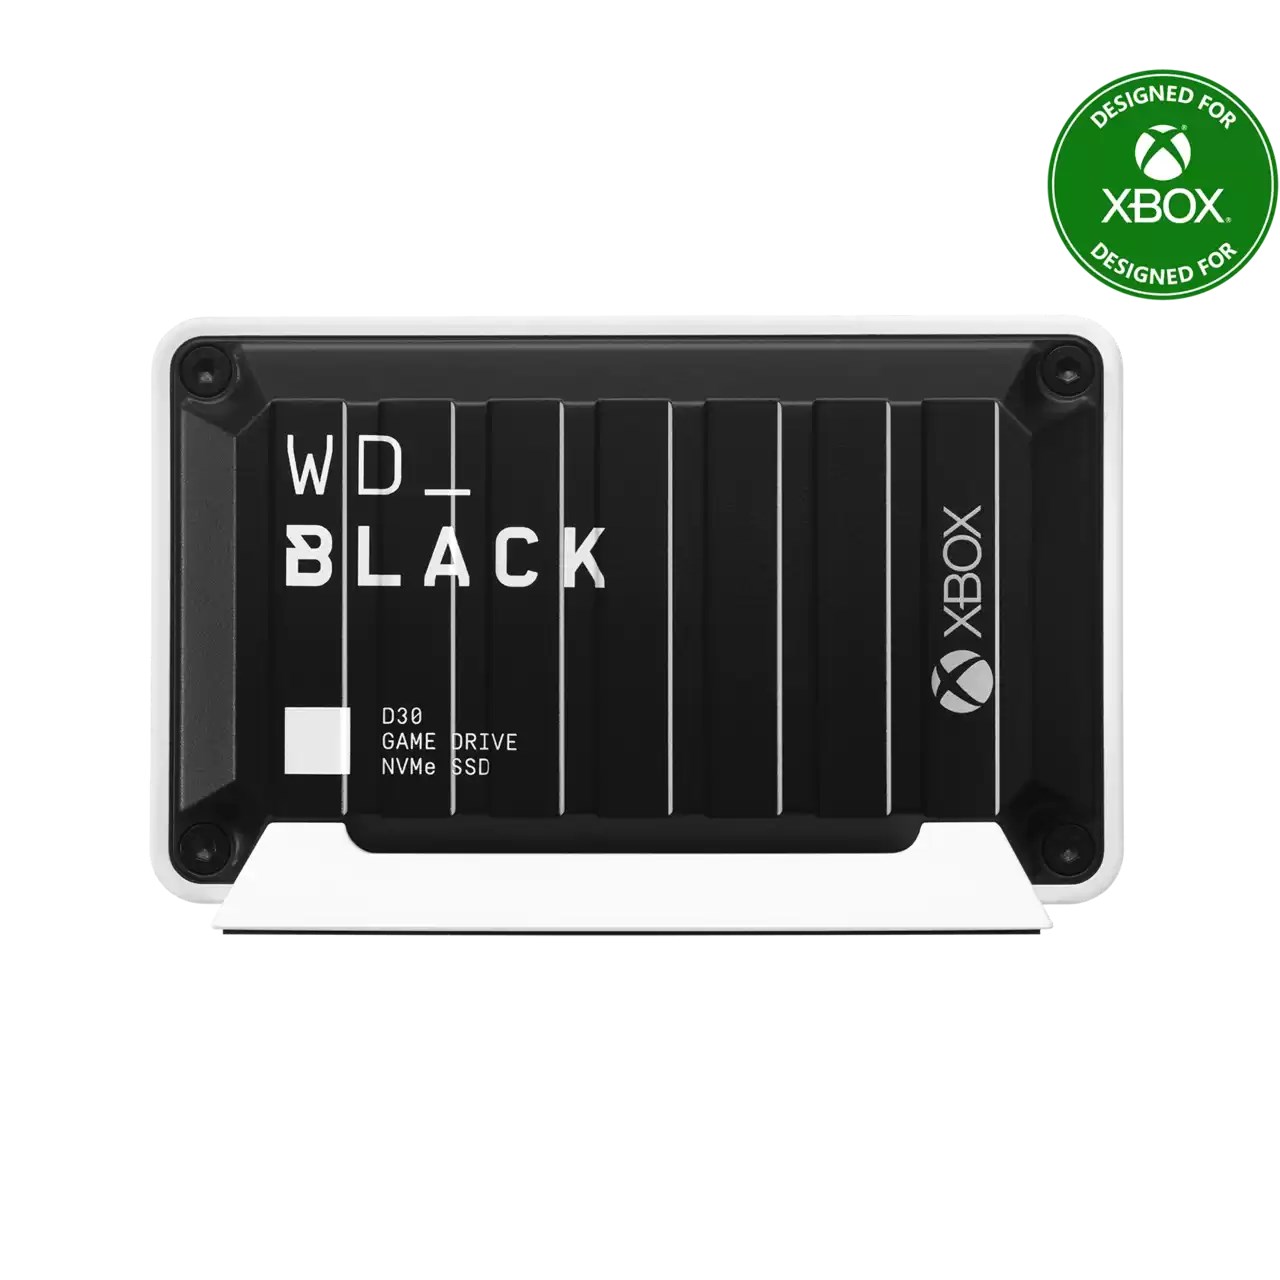 SanDisk externí SSD 1TB WD BLACK D30 Game Drive pro Xbox0 